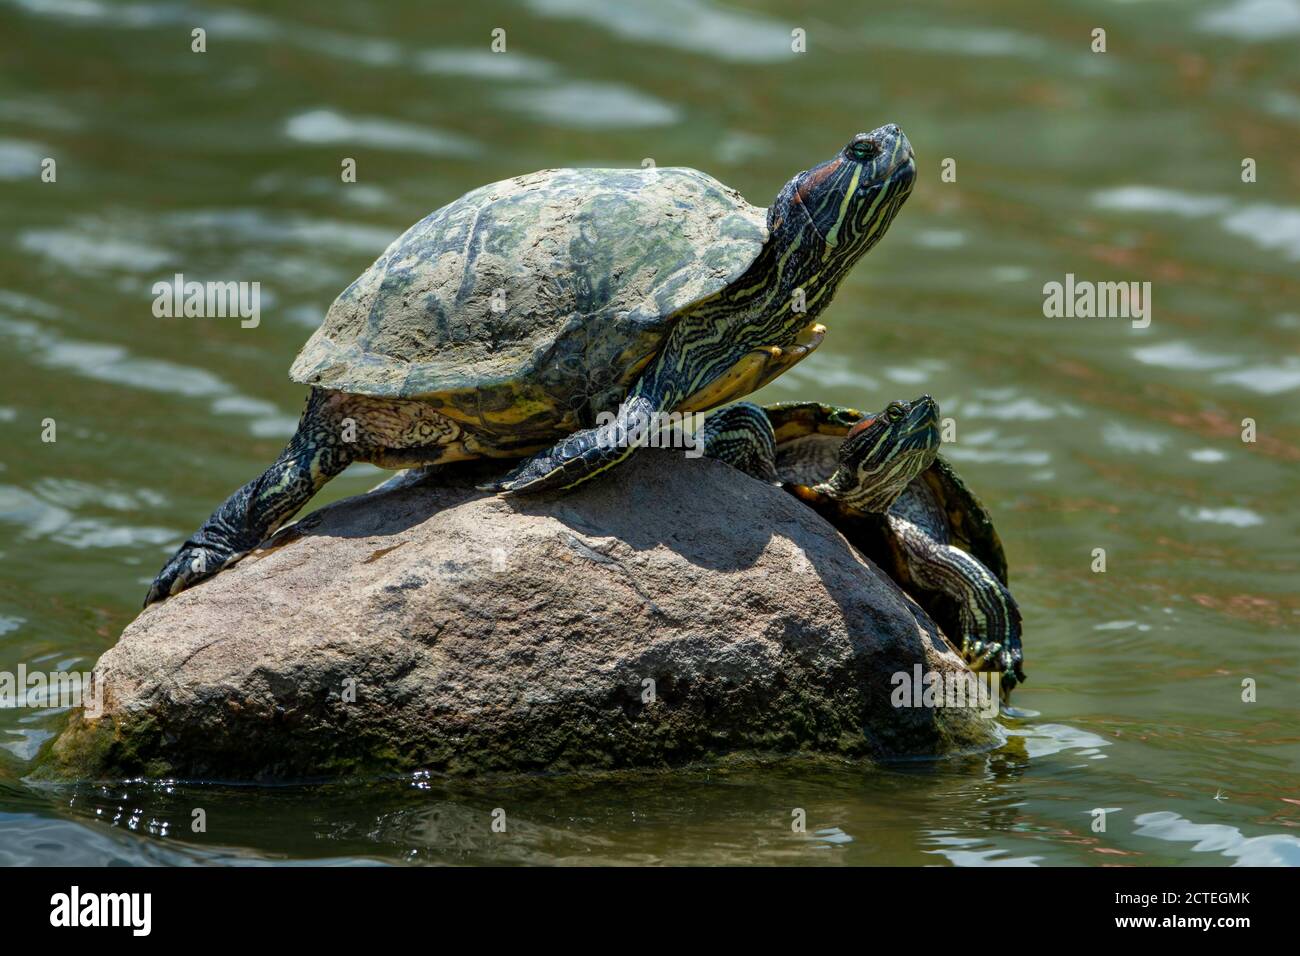 Tortoise - two water tortoise on above stone Stock Photo